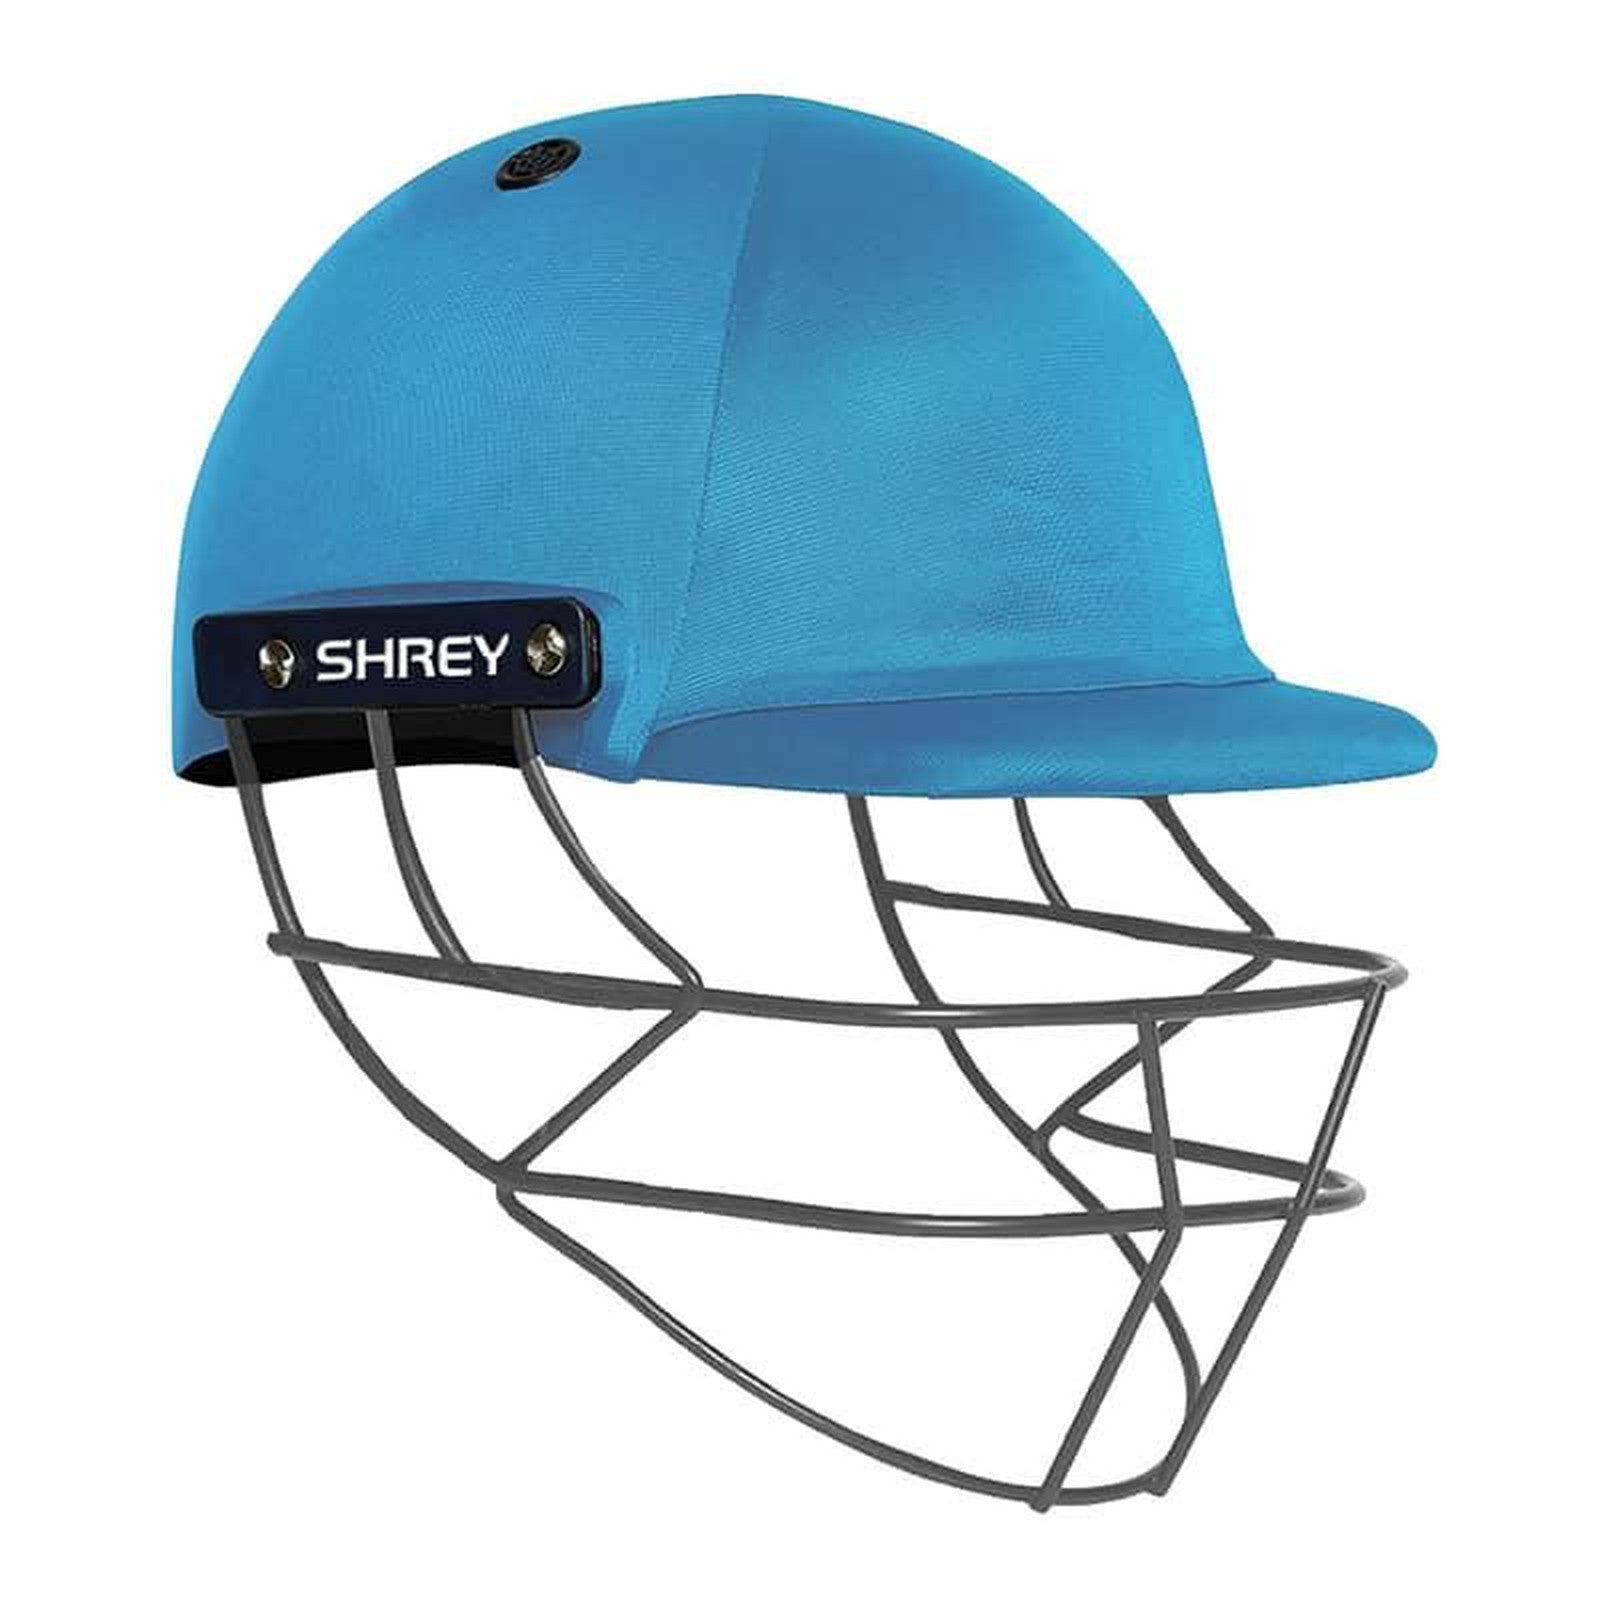 Shrey Performance 2.0 Cricket Helmet With Mild Steel - Sky Blue Youth